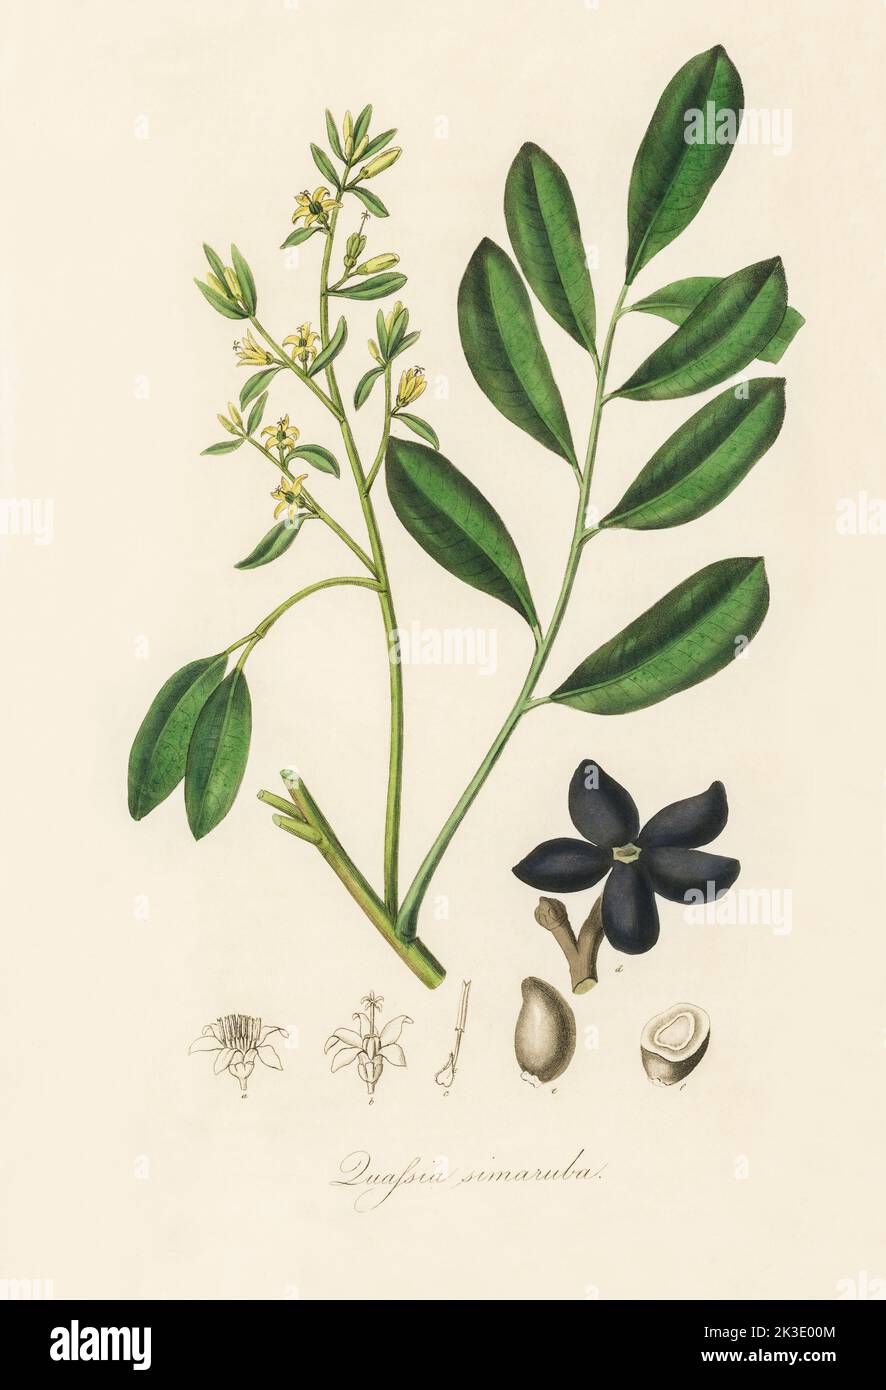 Lualsia simarula illustrazione da Medical botanica (1836) da John Stephenson e James Morss Churchill. Foto Stock